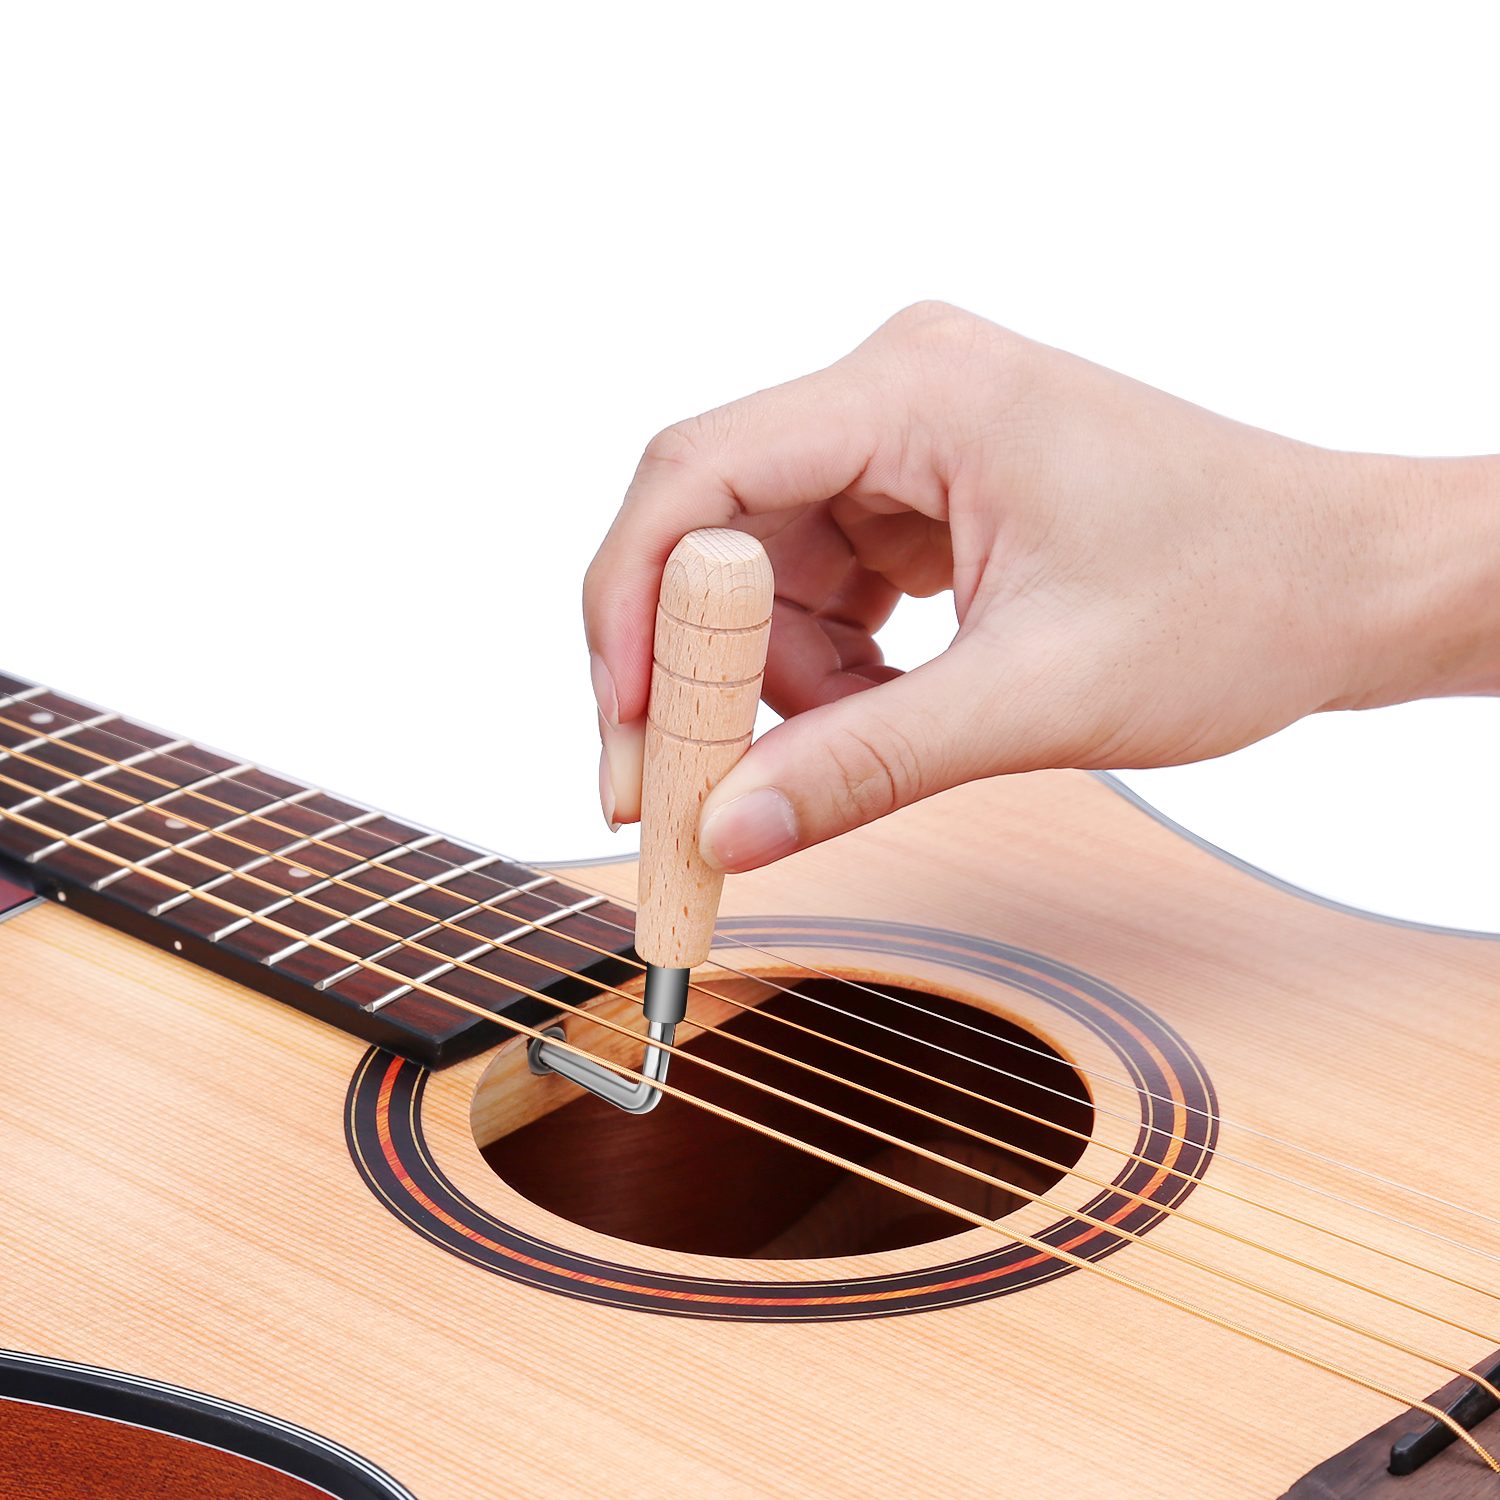 Acoustic Guitar Strings Changing Kit Tool Kit (Strings Tuner Picks